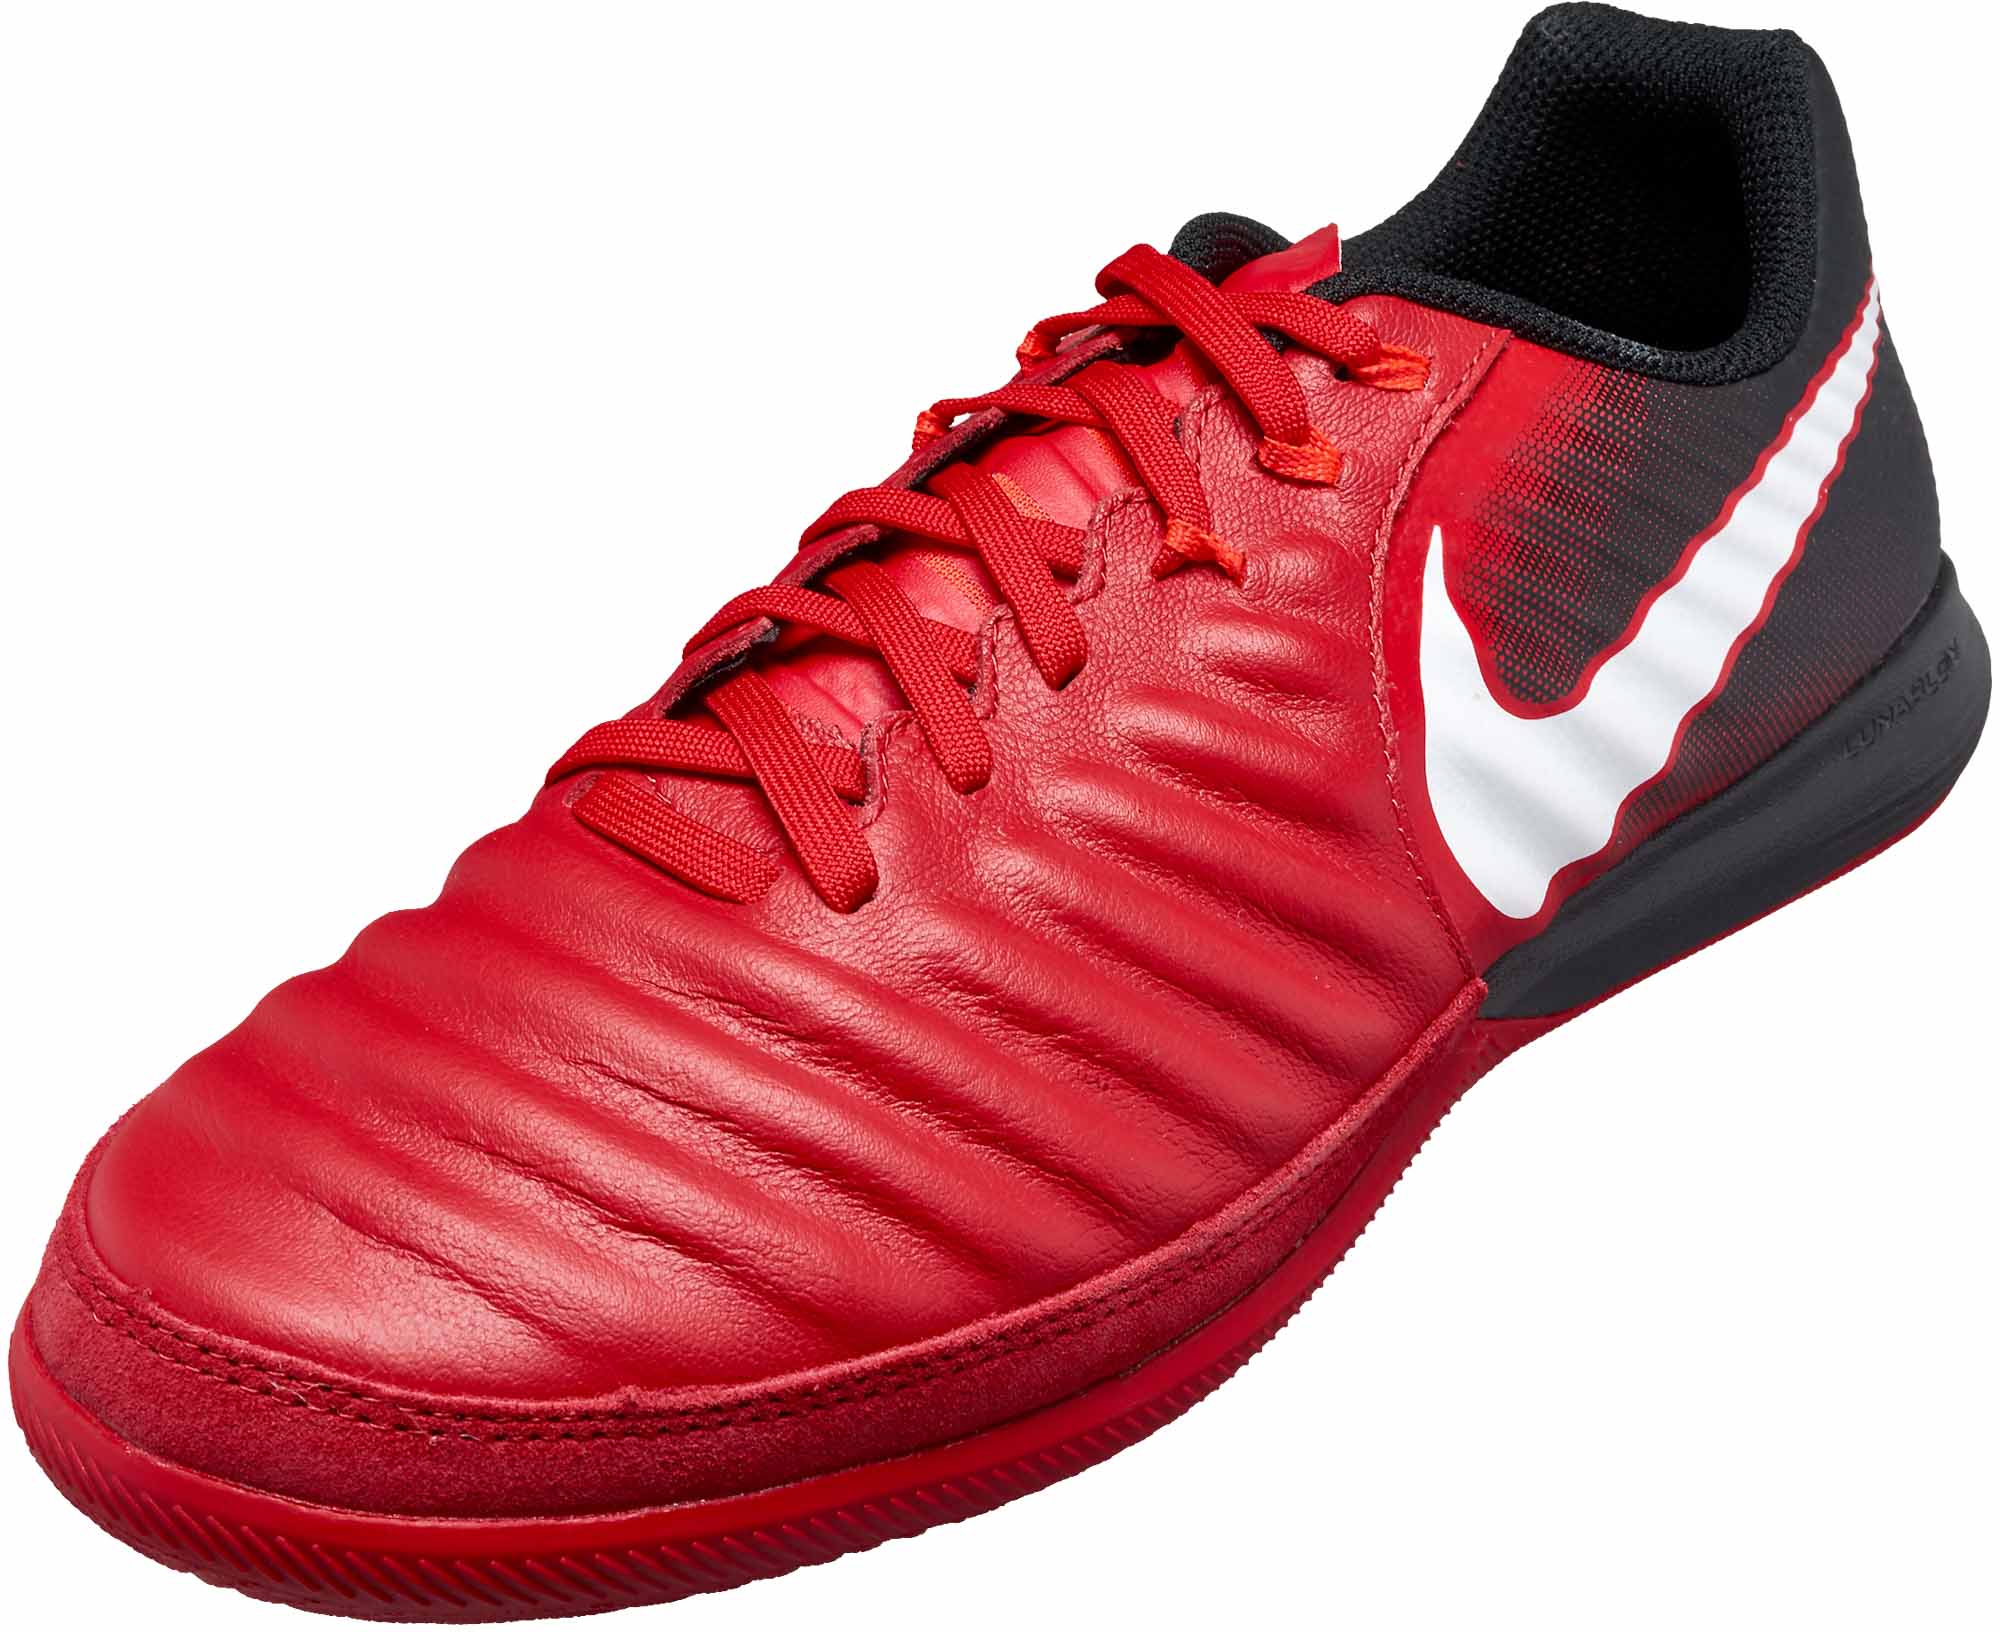 Nike TiempoX Finale Indoor Soccer Shoes- University Red